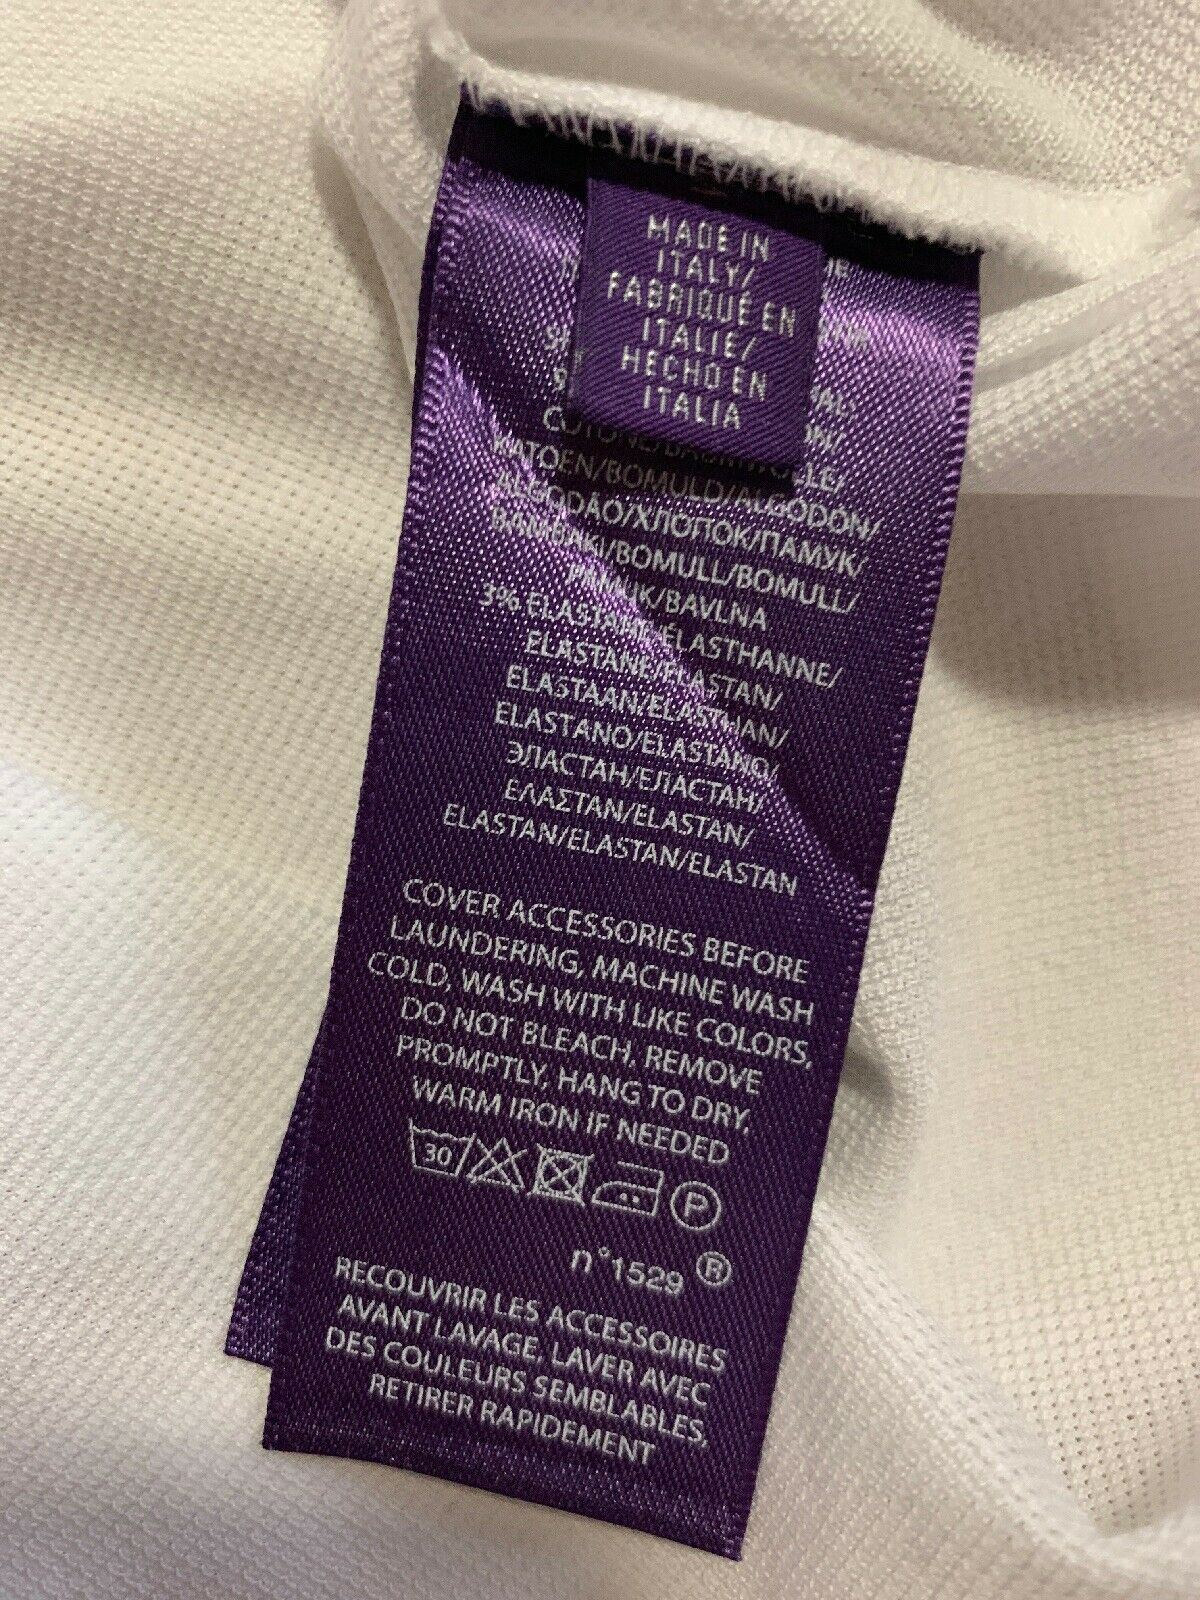 NWT $375 Ralph Lauren Purple Label Men Polo Shirt White XL Italy